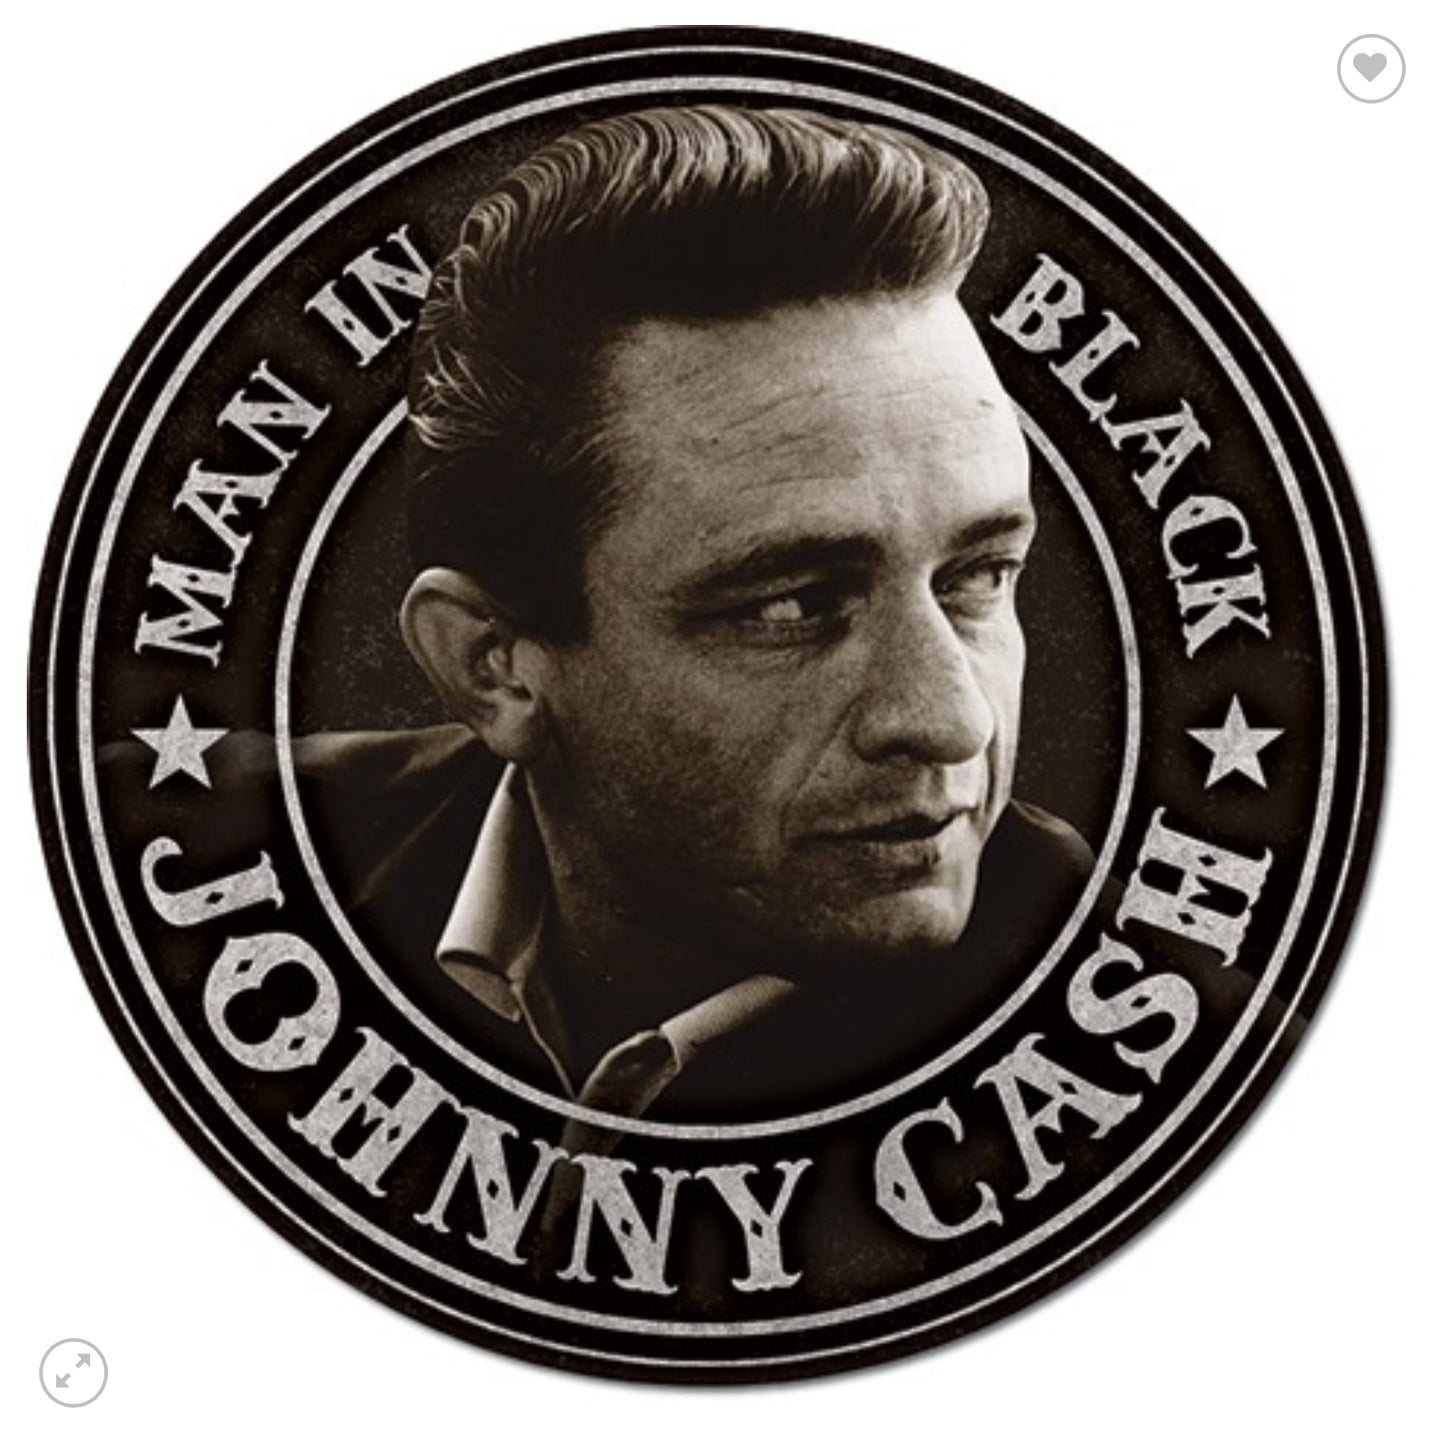 Blechschild "Johnny Cash Man in Black"